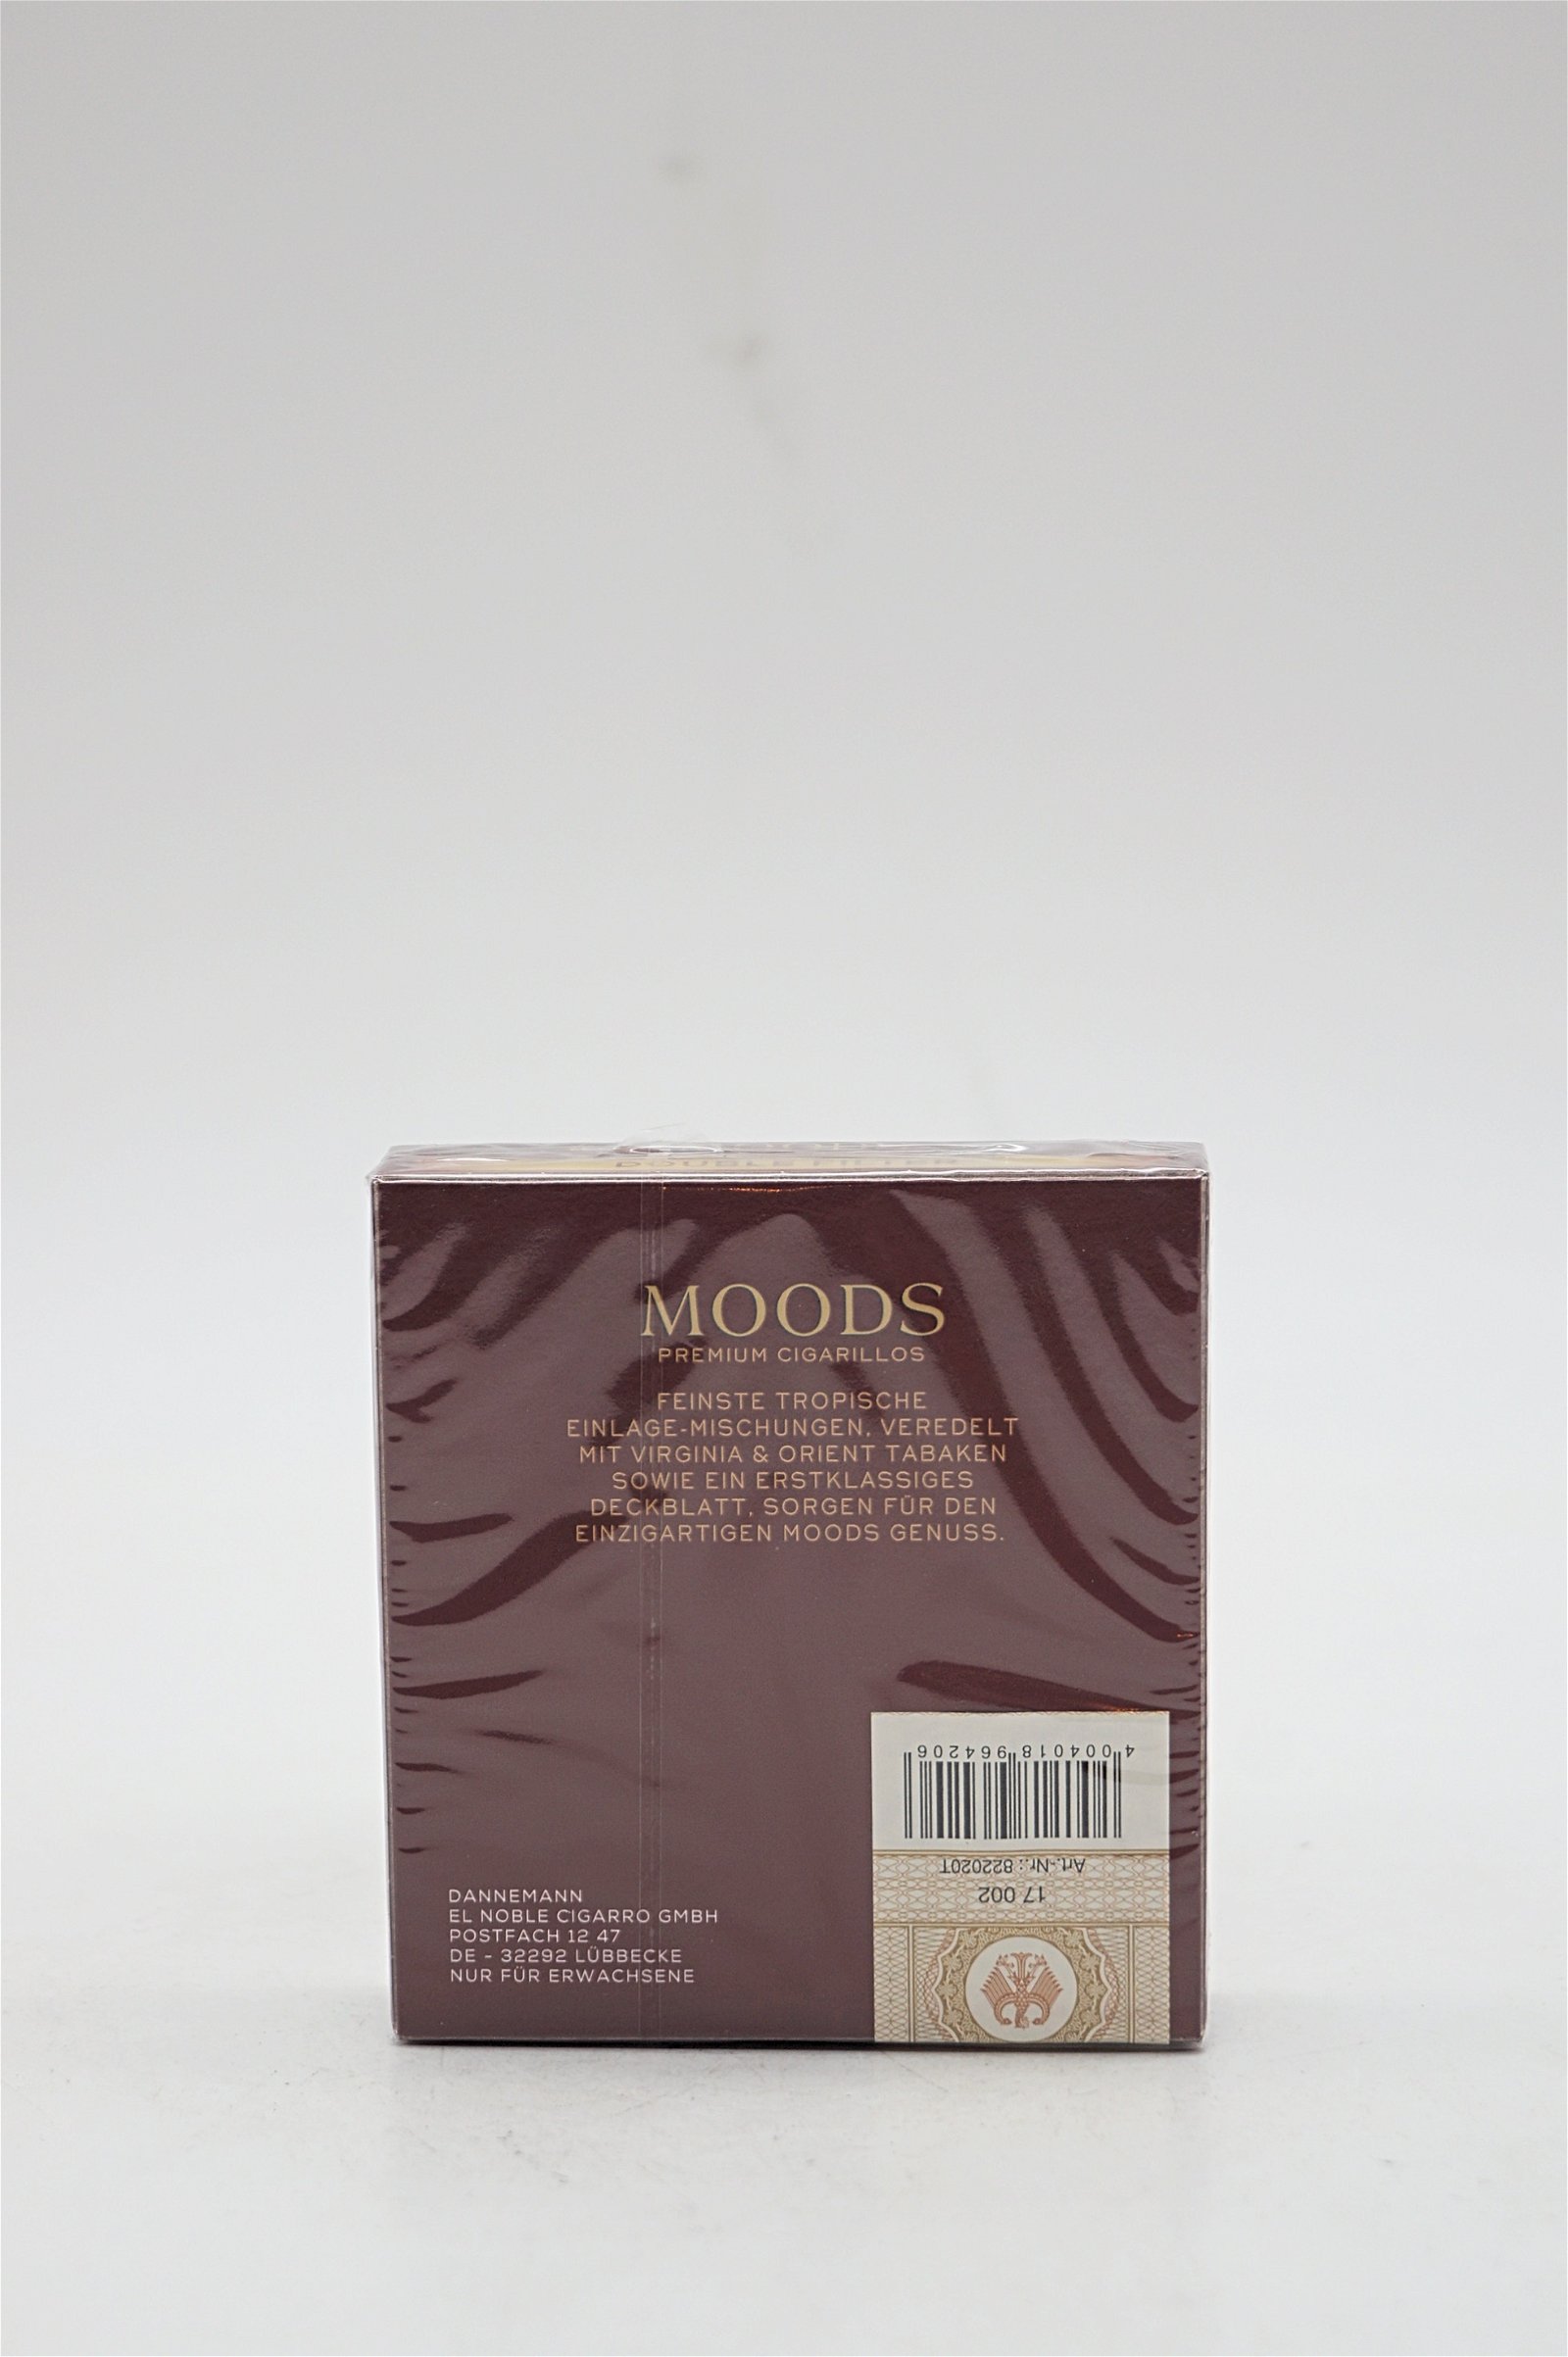 Moods Mini Double Filter 20 Premium Cigarillos